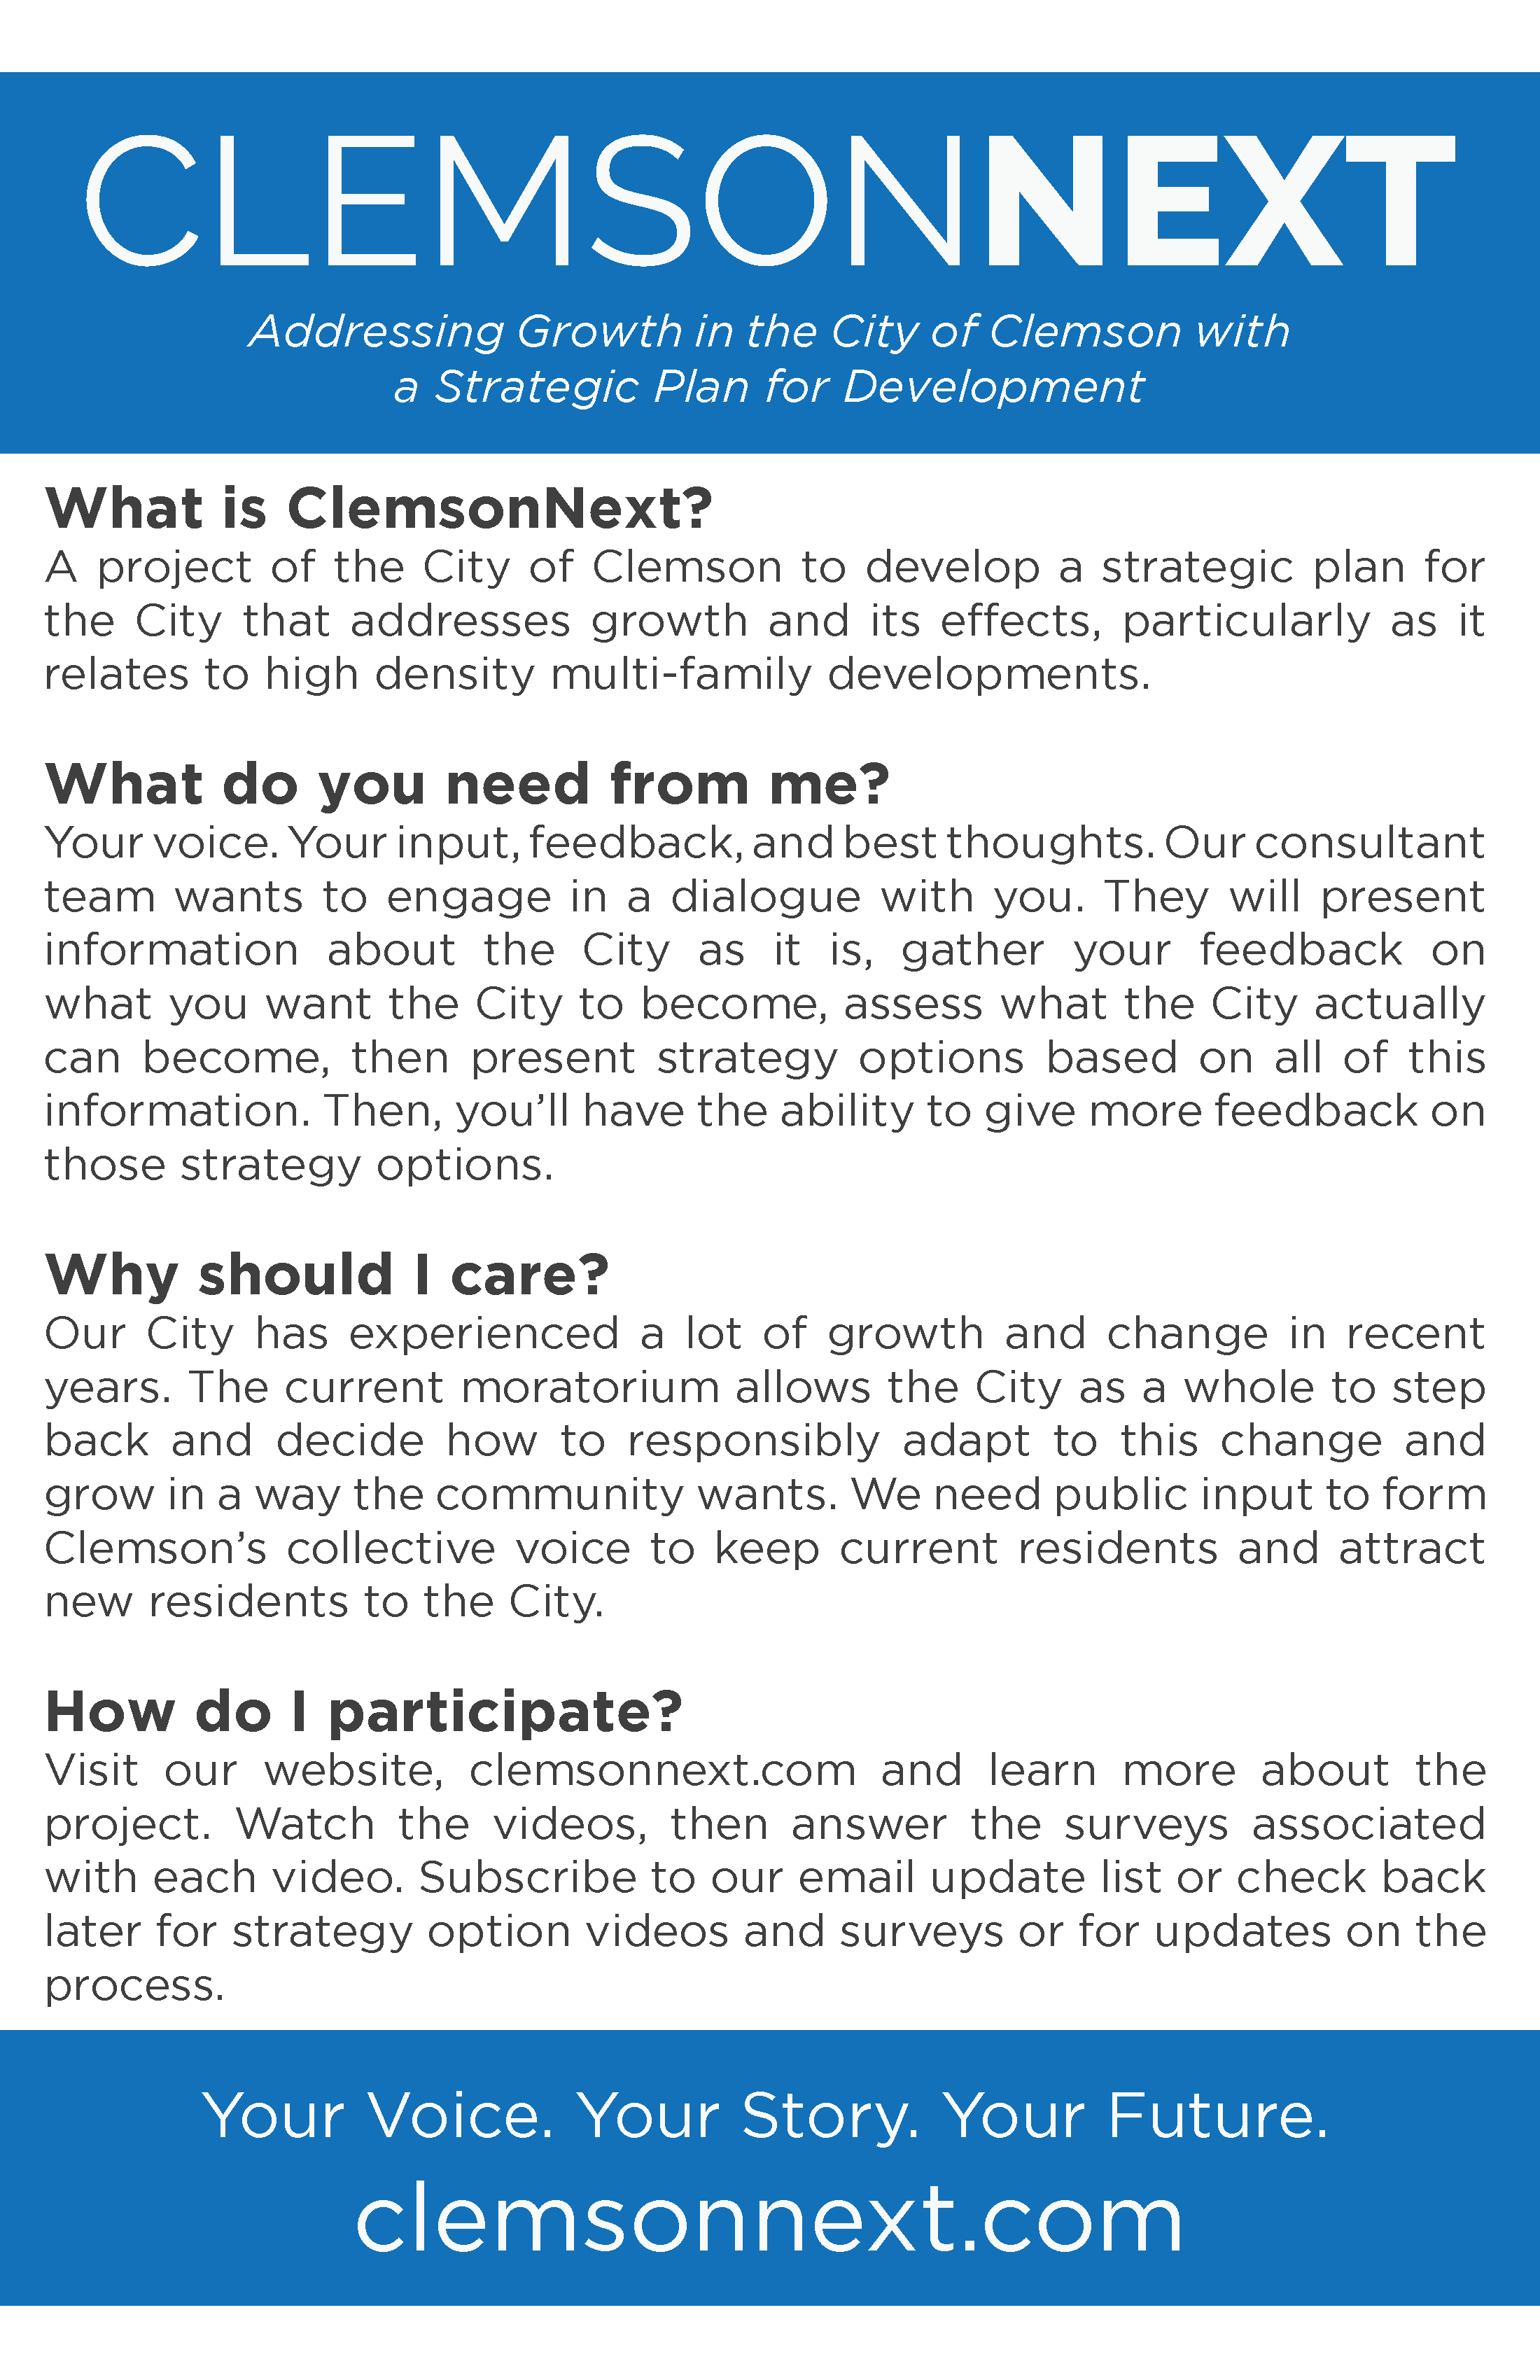 Information about ClemsonNext